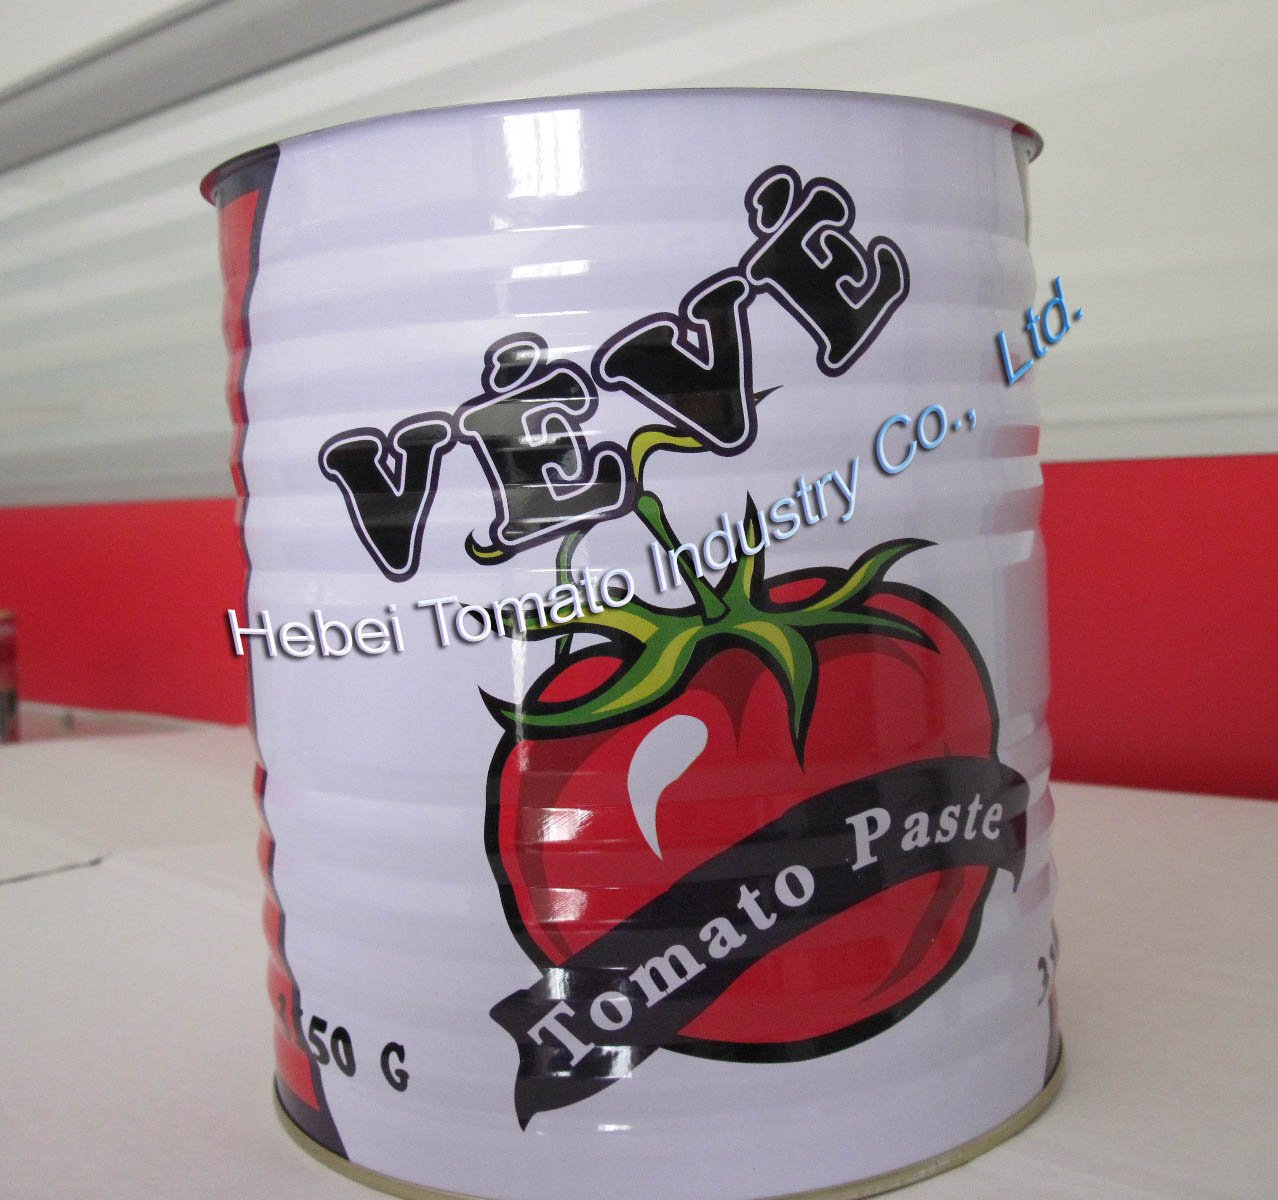 fabricante de pasta de tomate pasta de tomate halal 4,5 kg de pasta de tomate enlatada